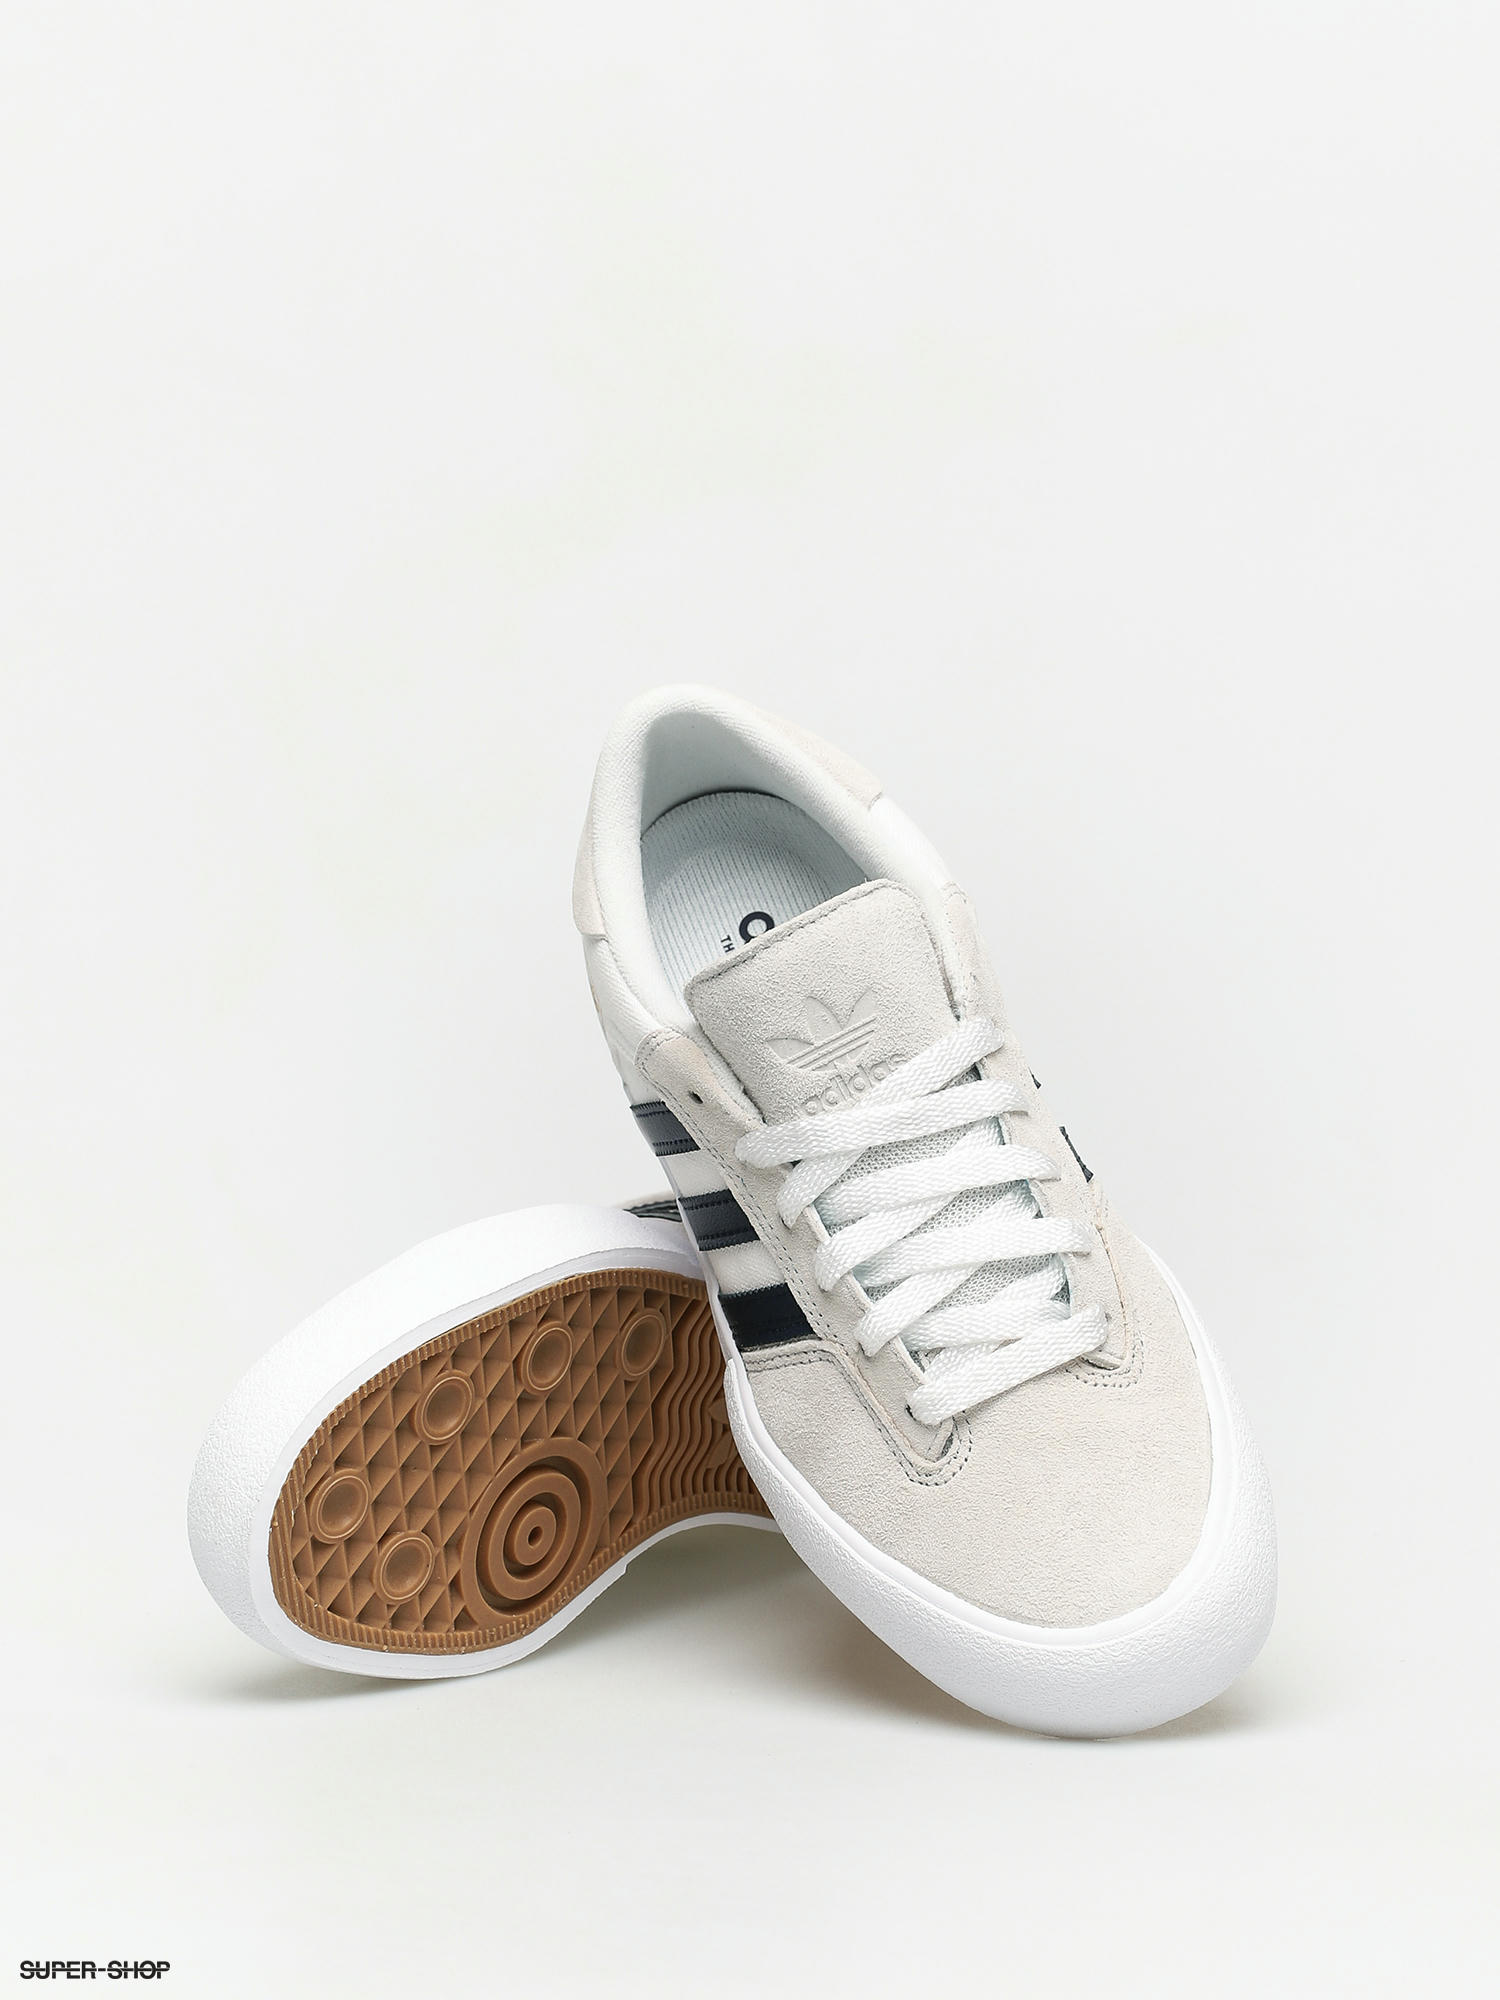 adidas matchbreak super white & navy shoes